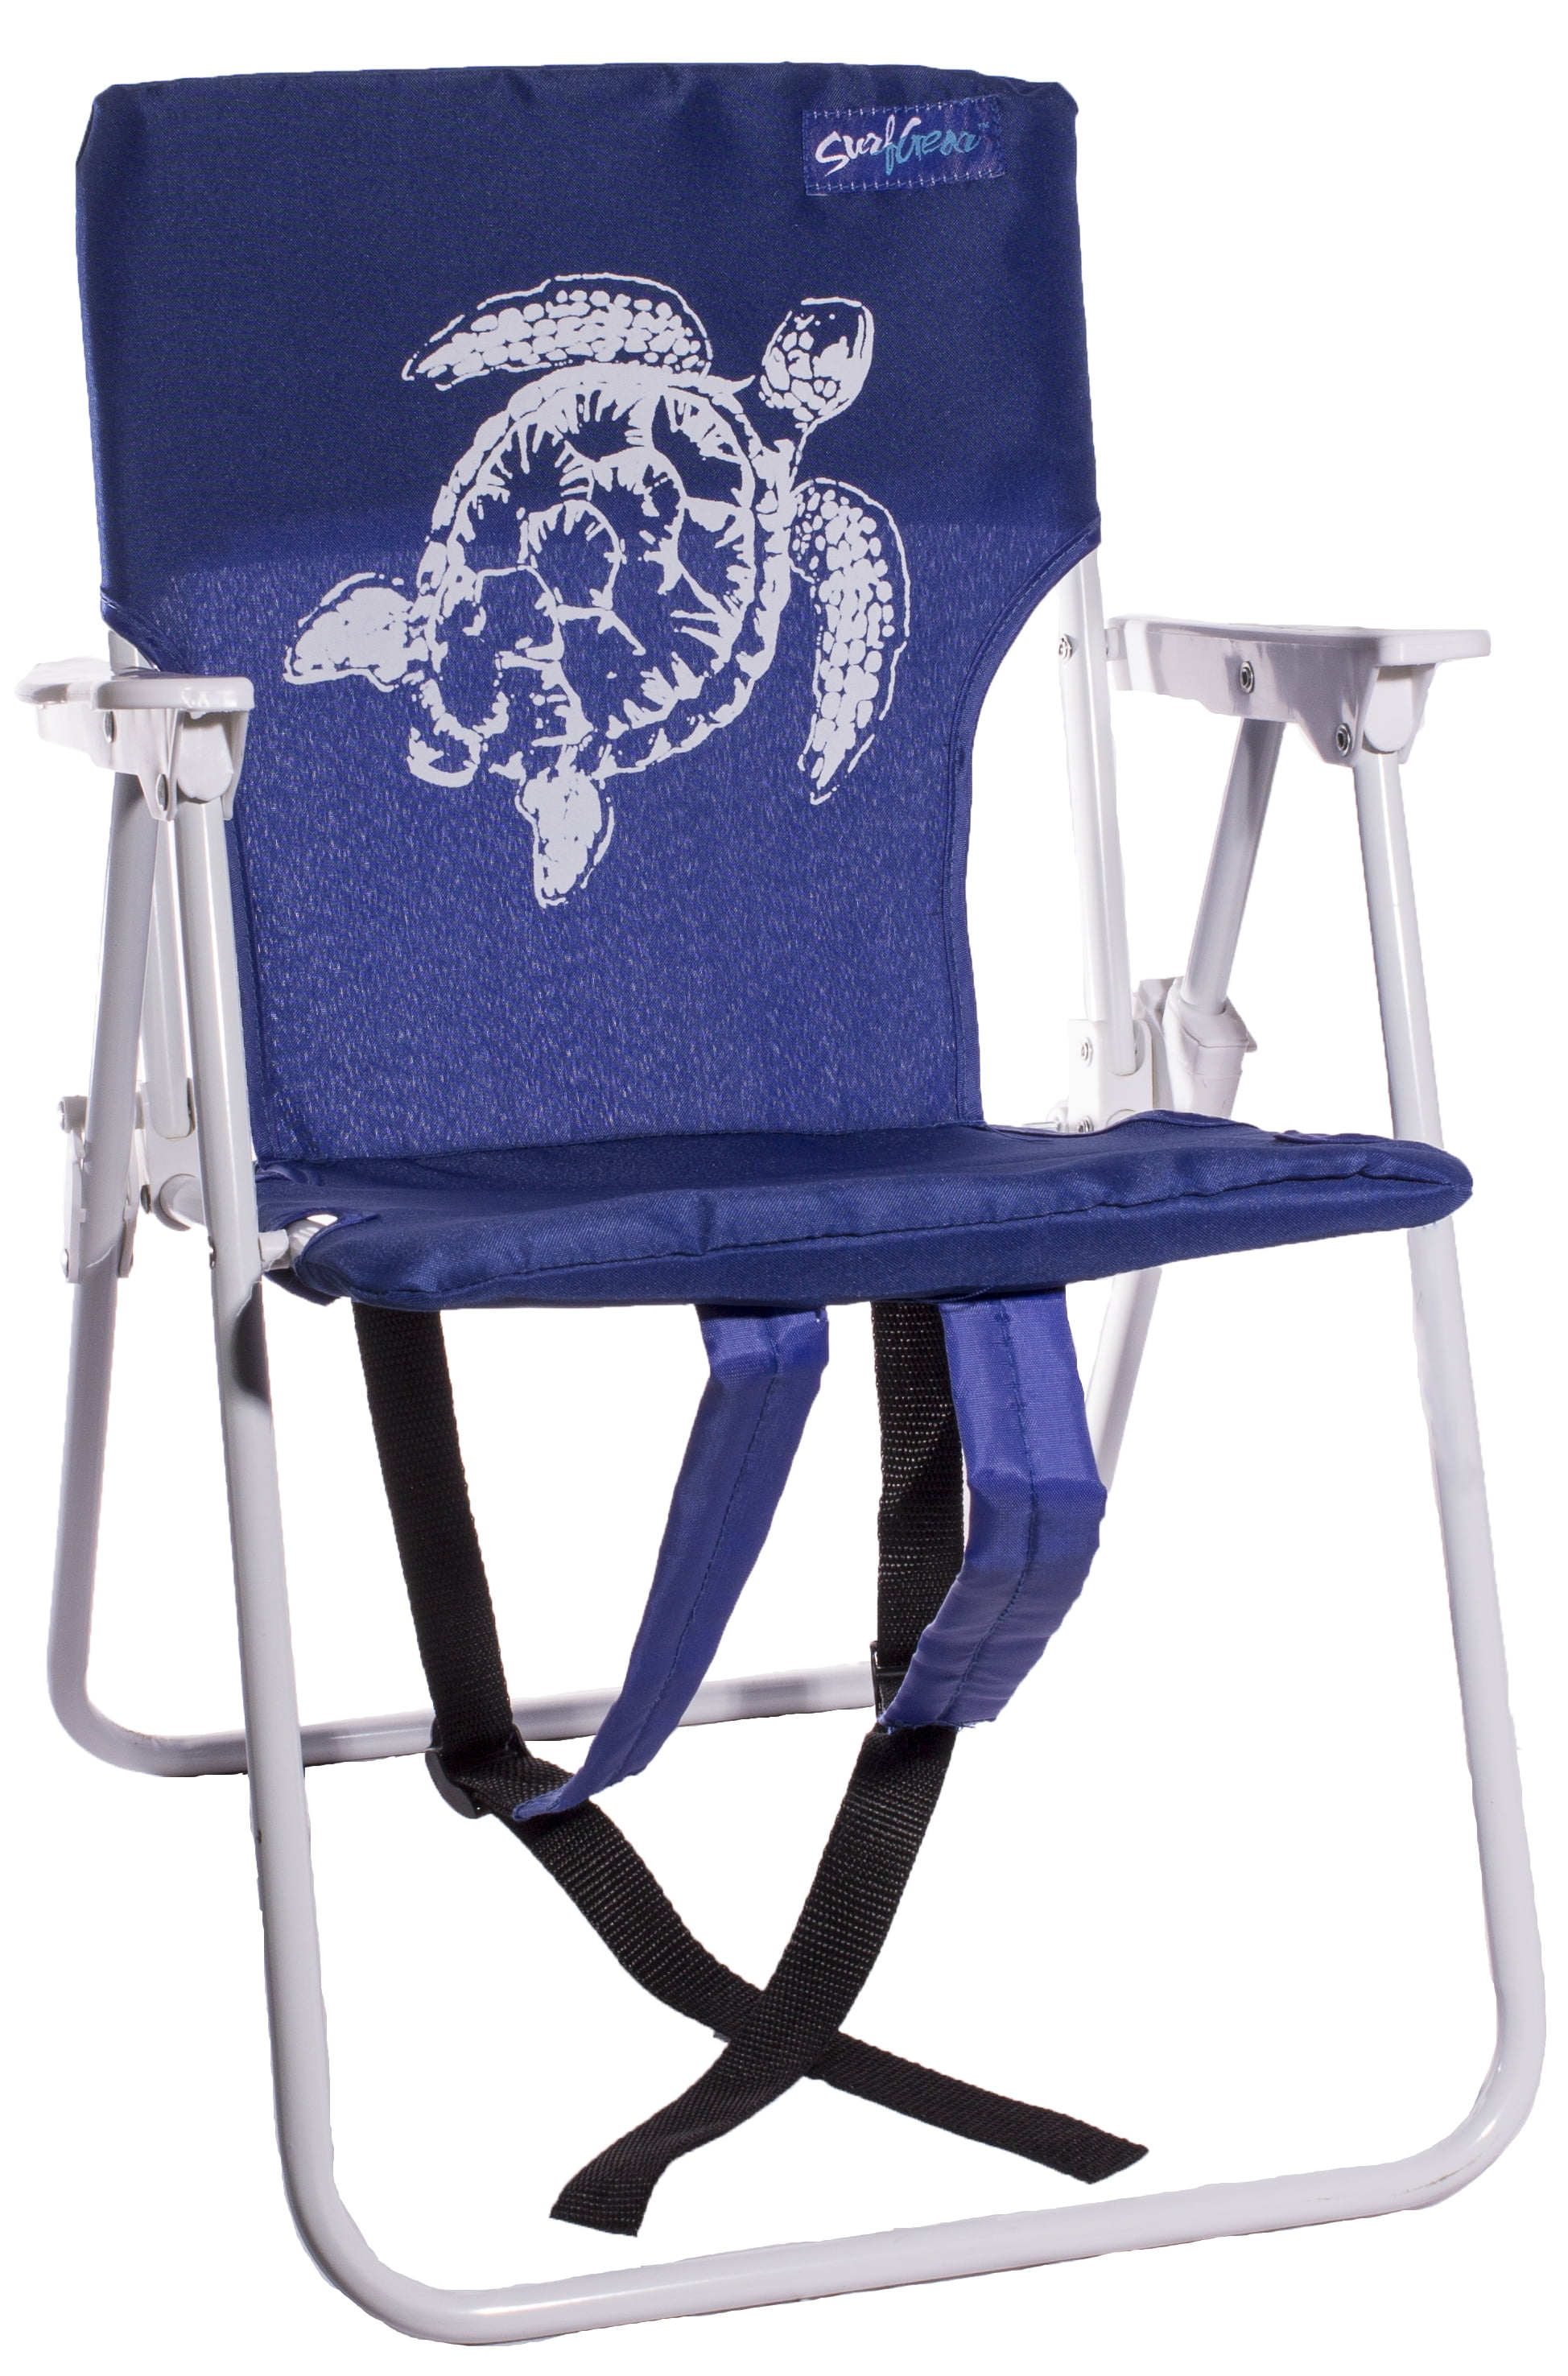 Unique Surf Gear Beach Chair with Simple Decor